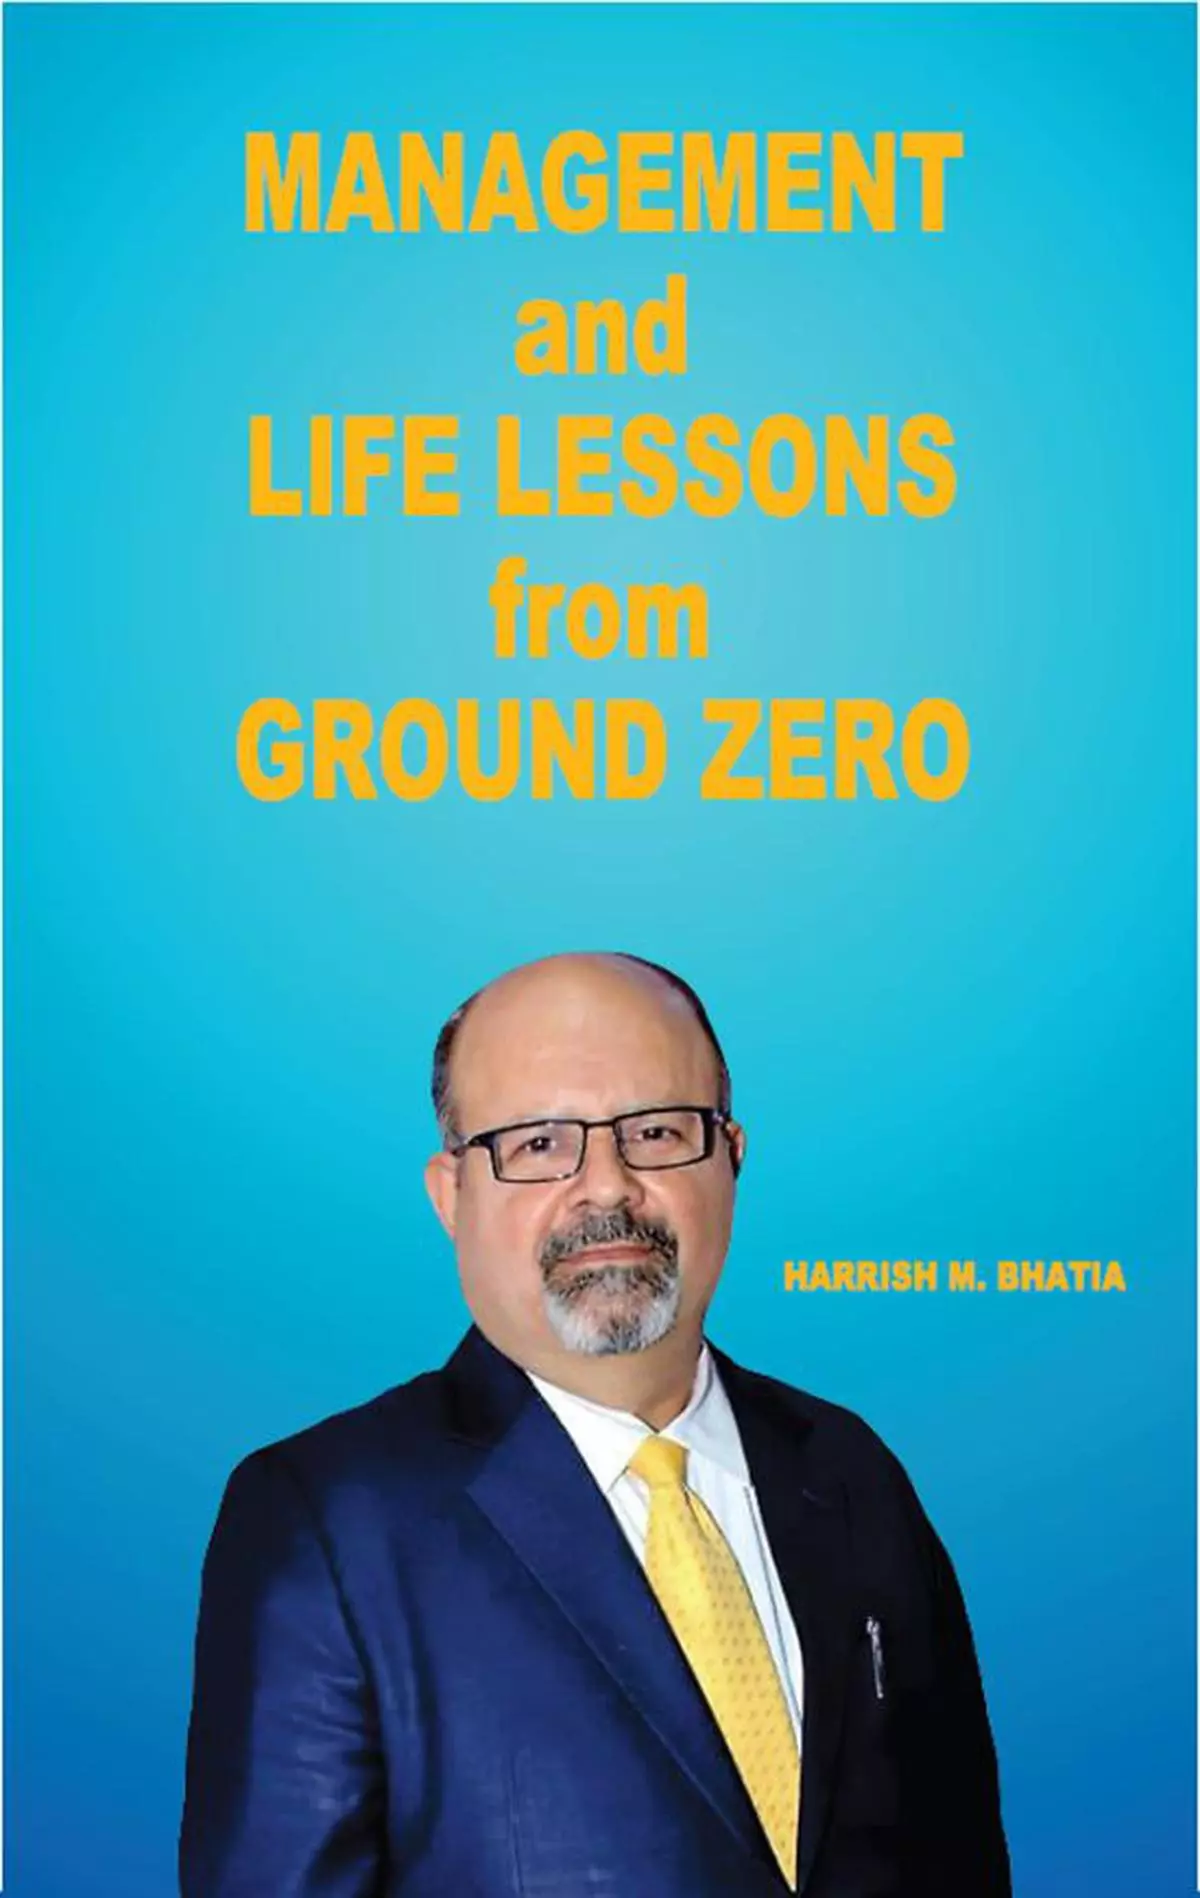 Management and Life Lessons from Ground Zero
Harrish Bhatia